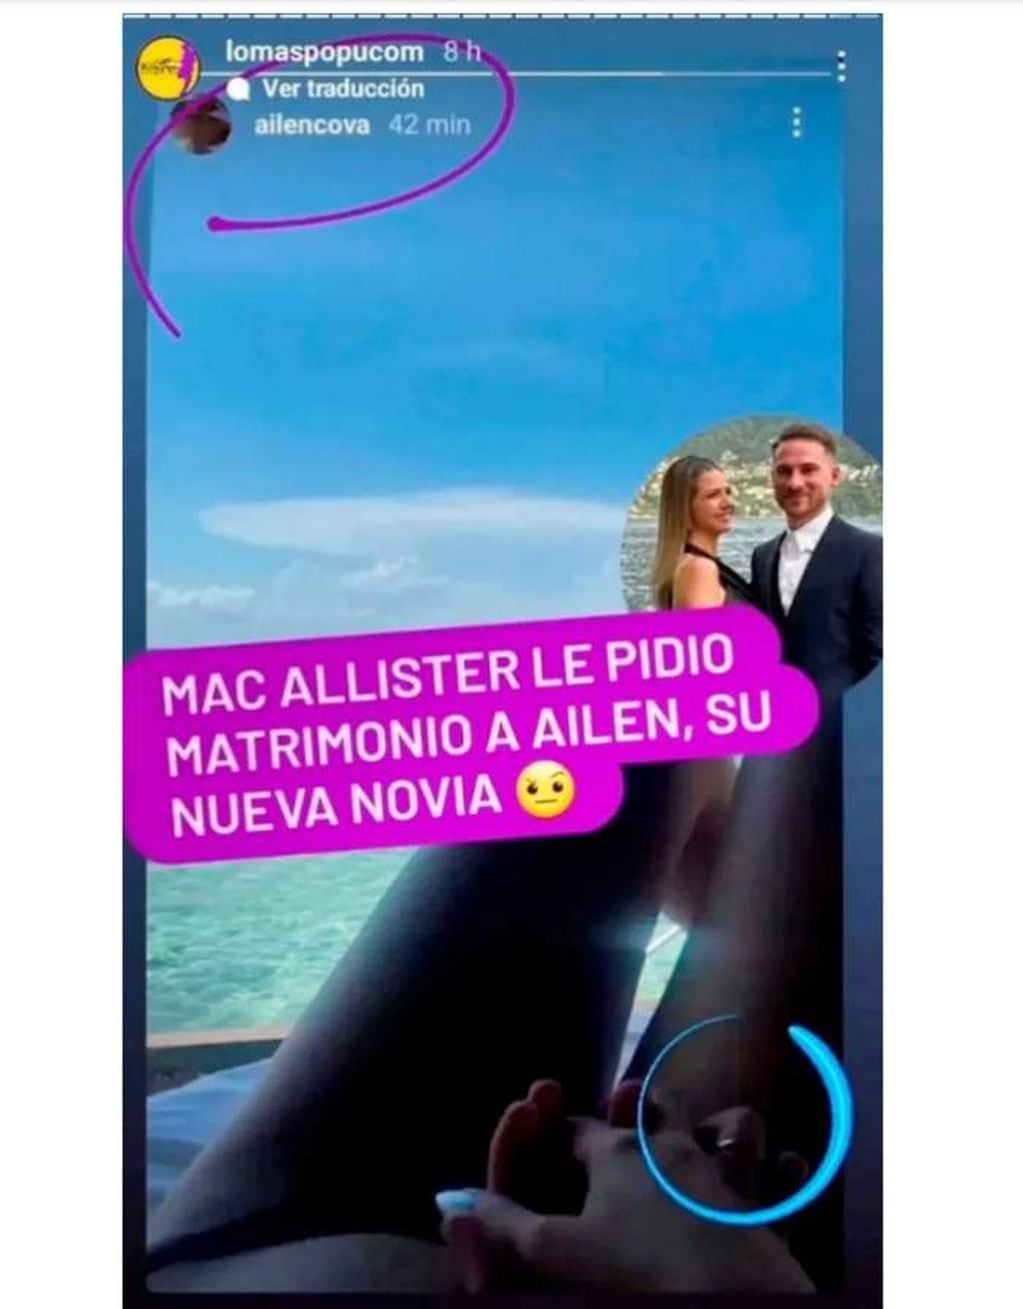 Rumorean que Alexis Mac Allister podría estar comprometido con Ailén Cova.